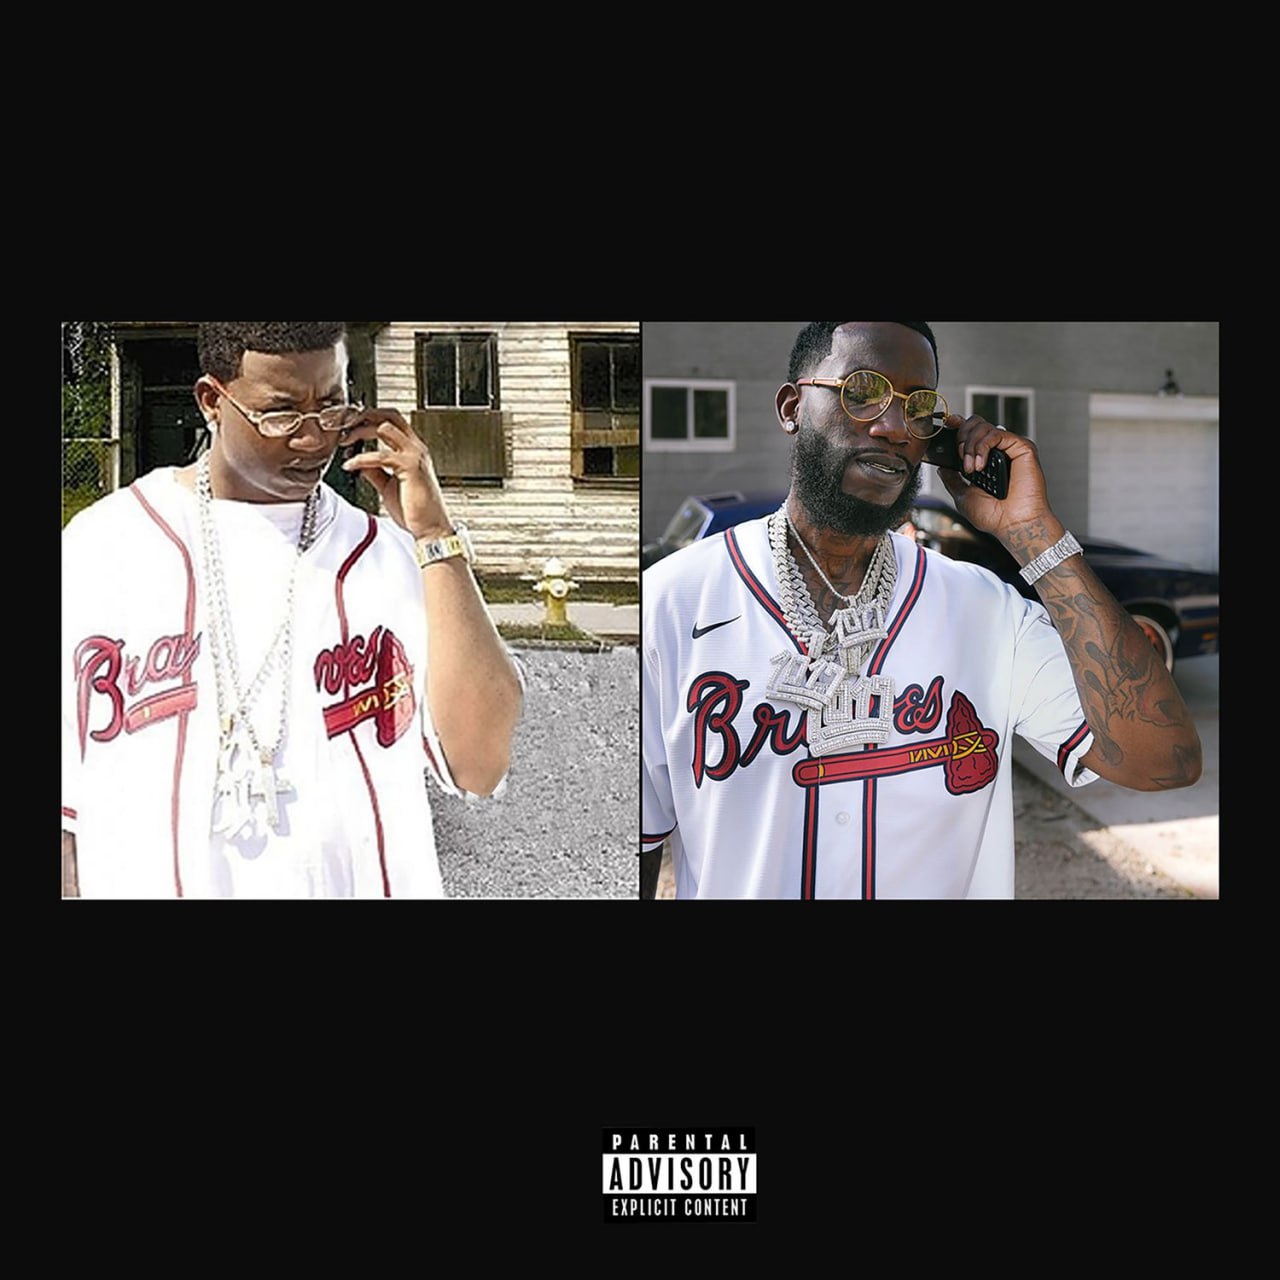 06 Gucci - Gucci Mane ft. DaBaby & 21 Savage